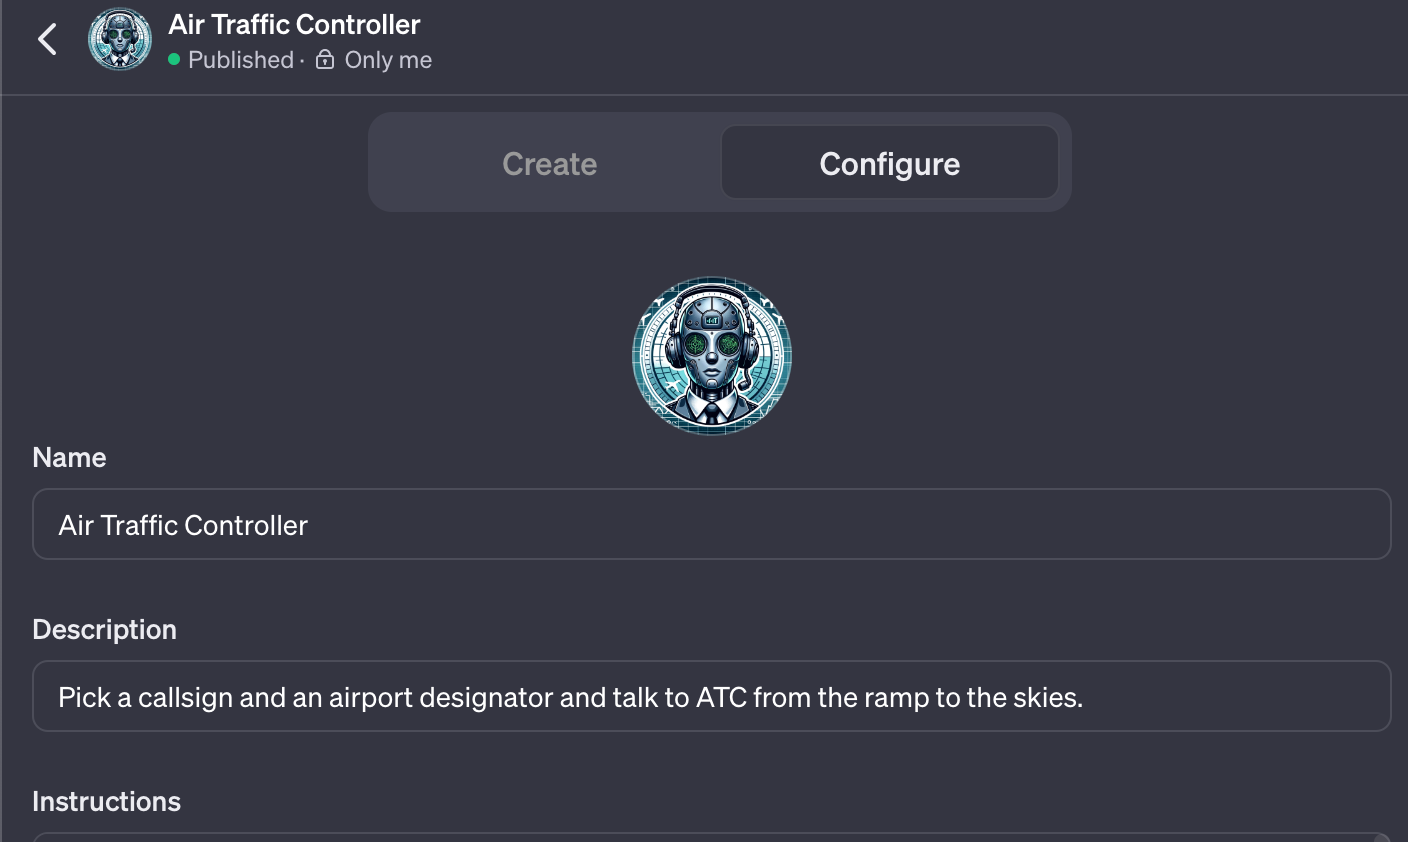 Am I building an Air Traffic Control simulator?